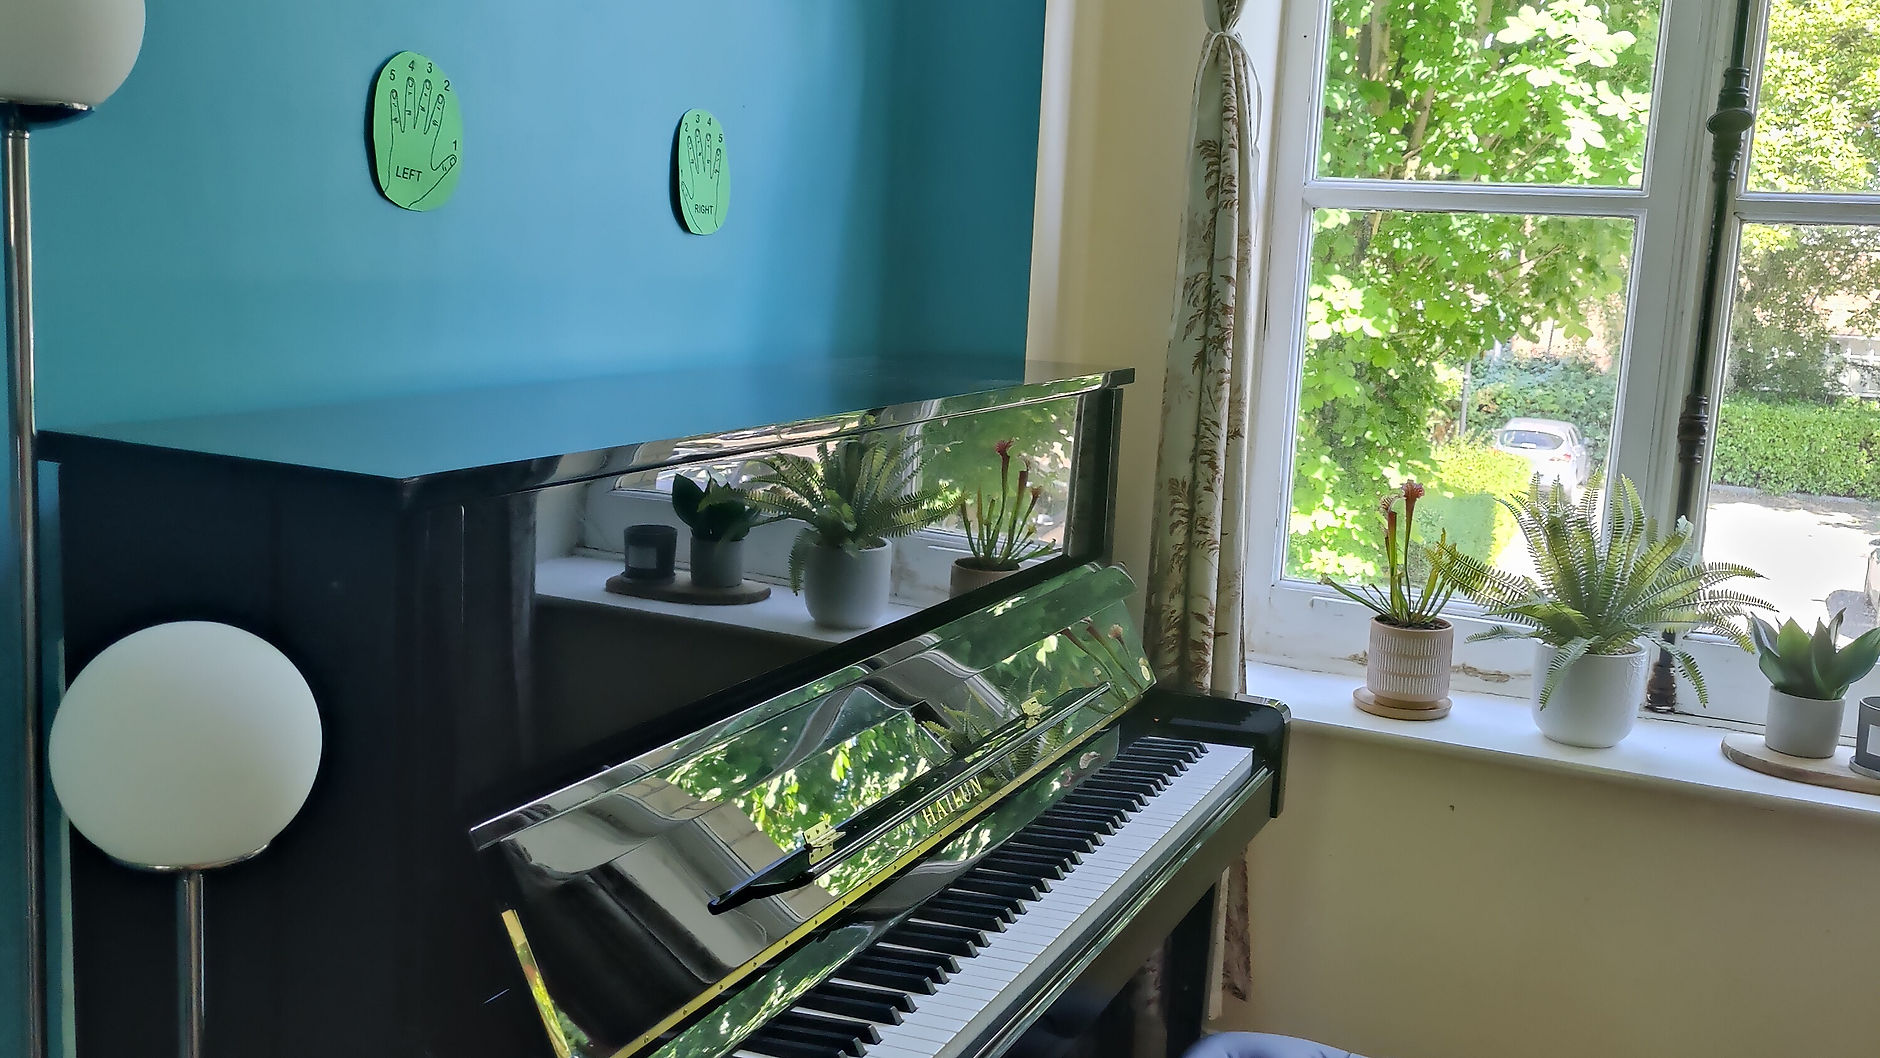 Lorcans Piano Studio